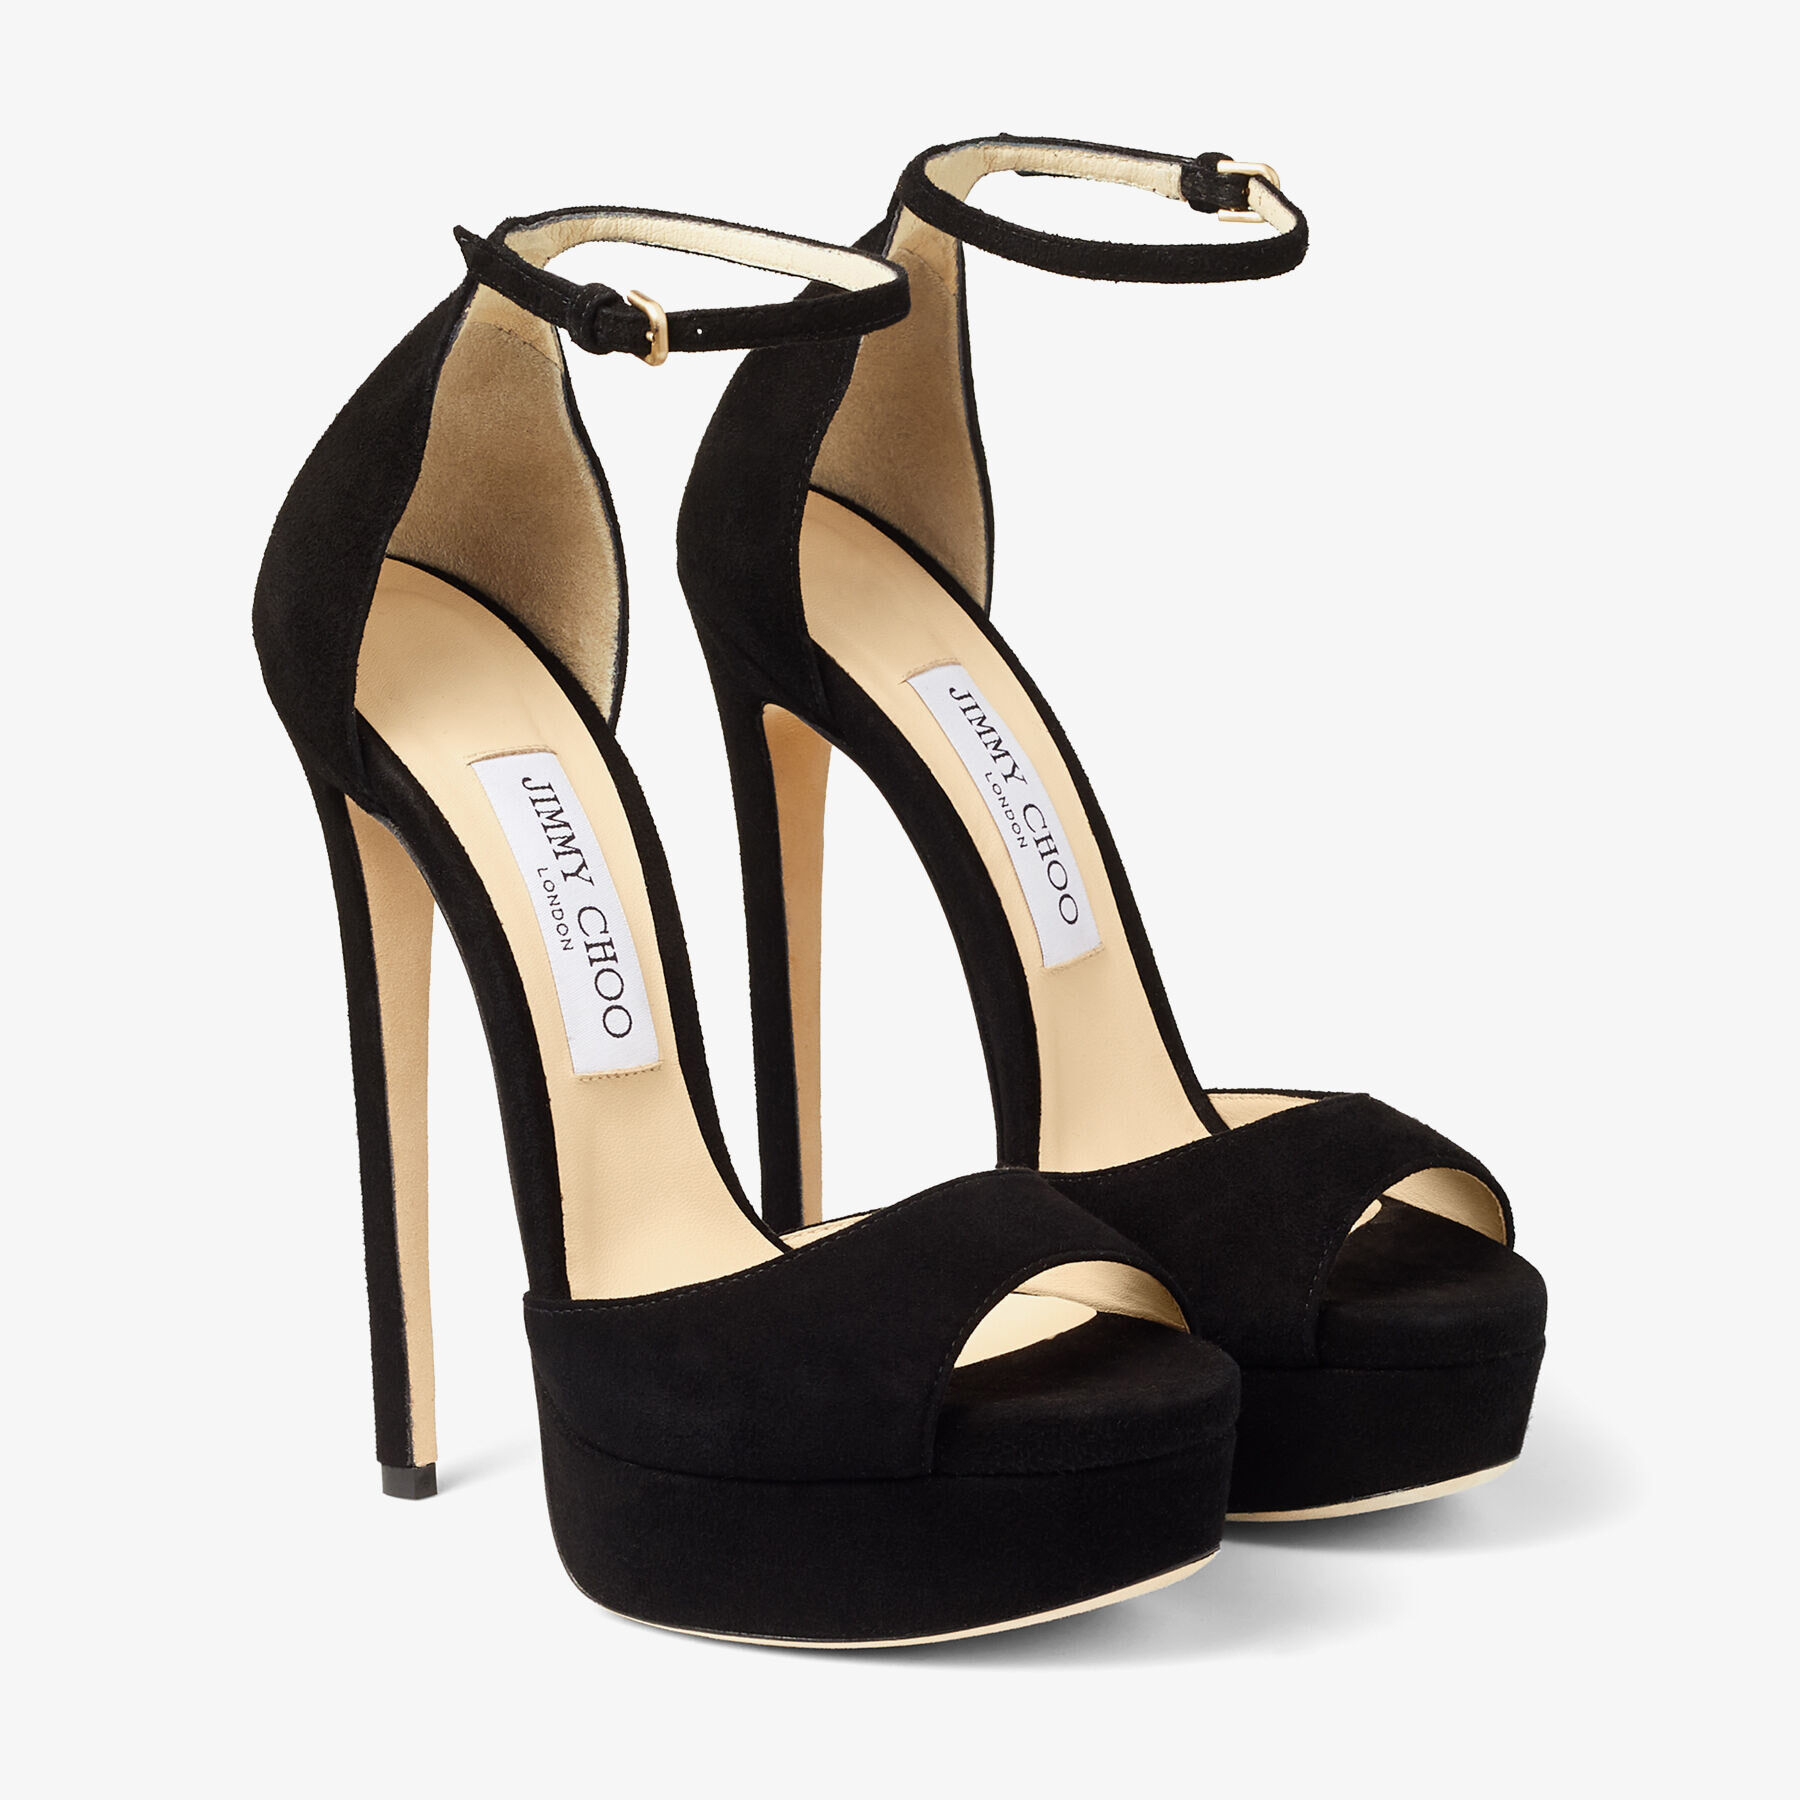 Black suede Jimmy Choo Vanessa 85 heels Size 7.5 | eBay